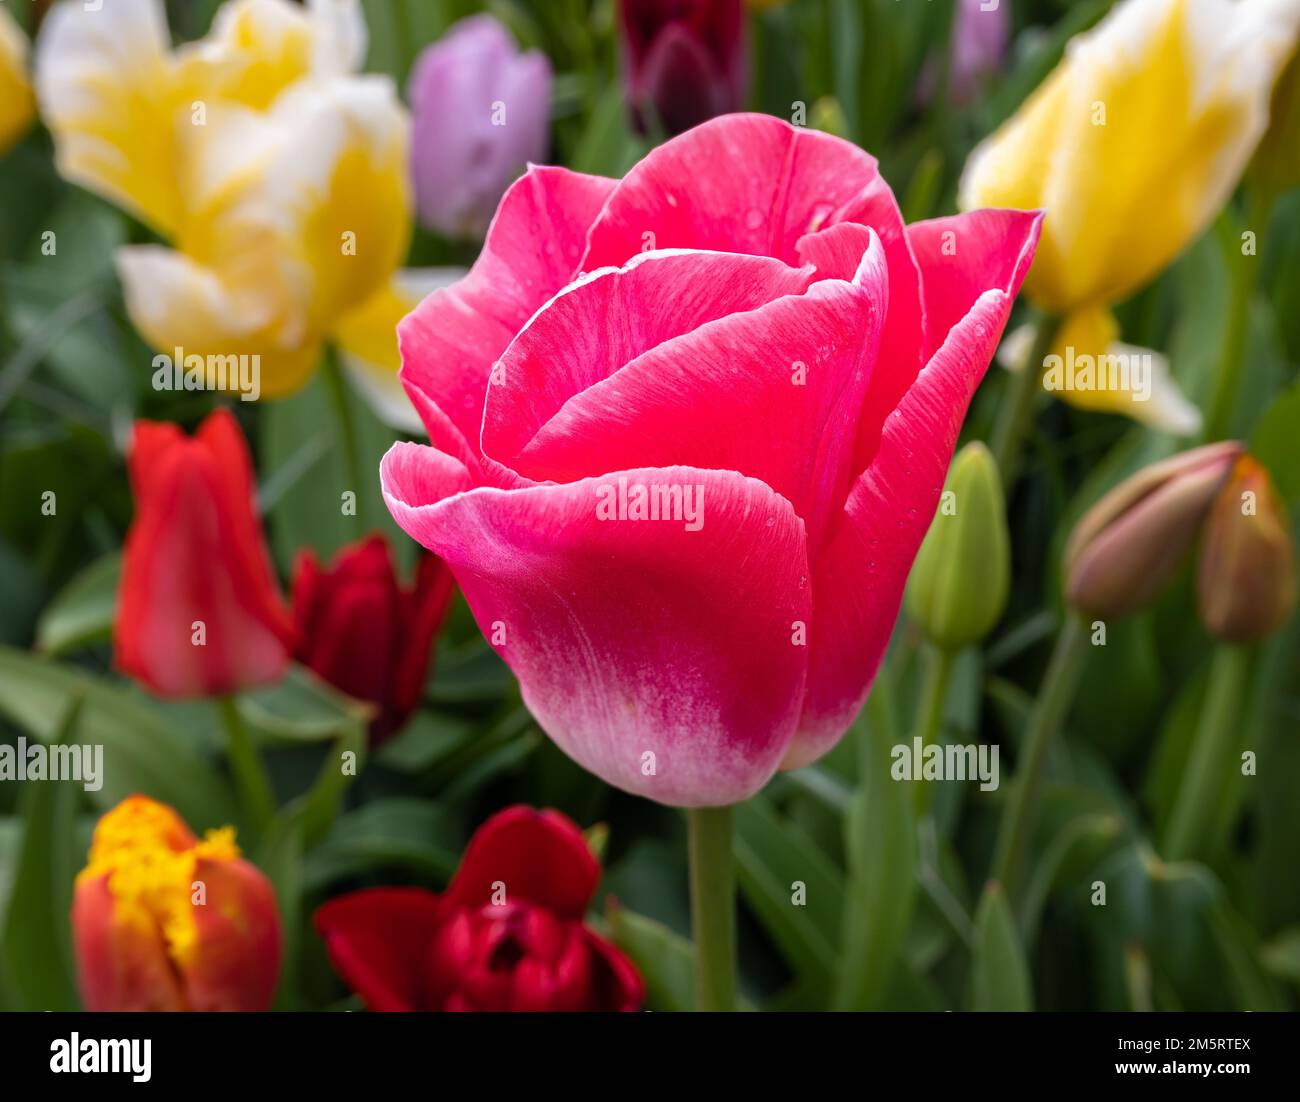 Rote blühende Tulpen im Park Keukenhof in den Niederlanden Stockfoto